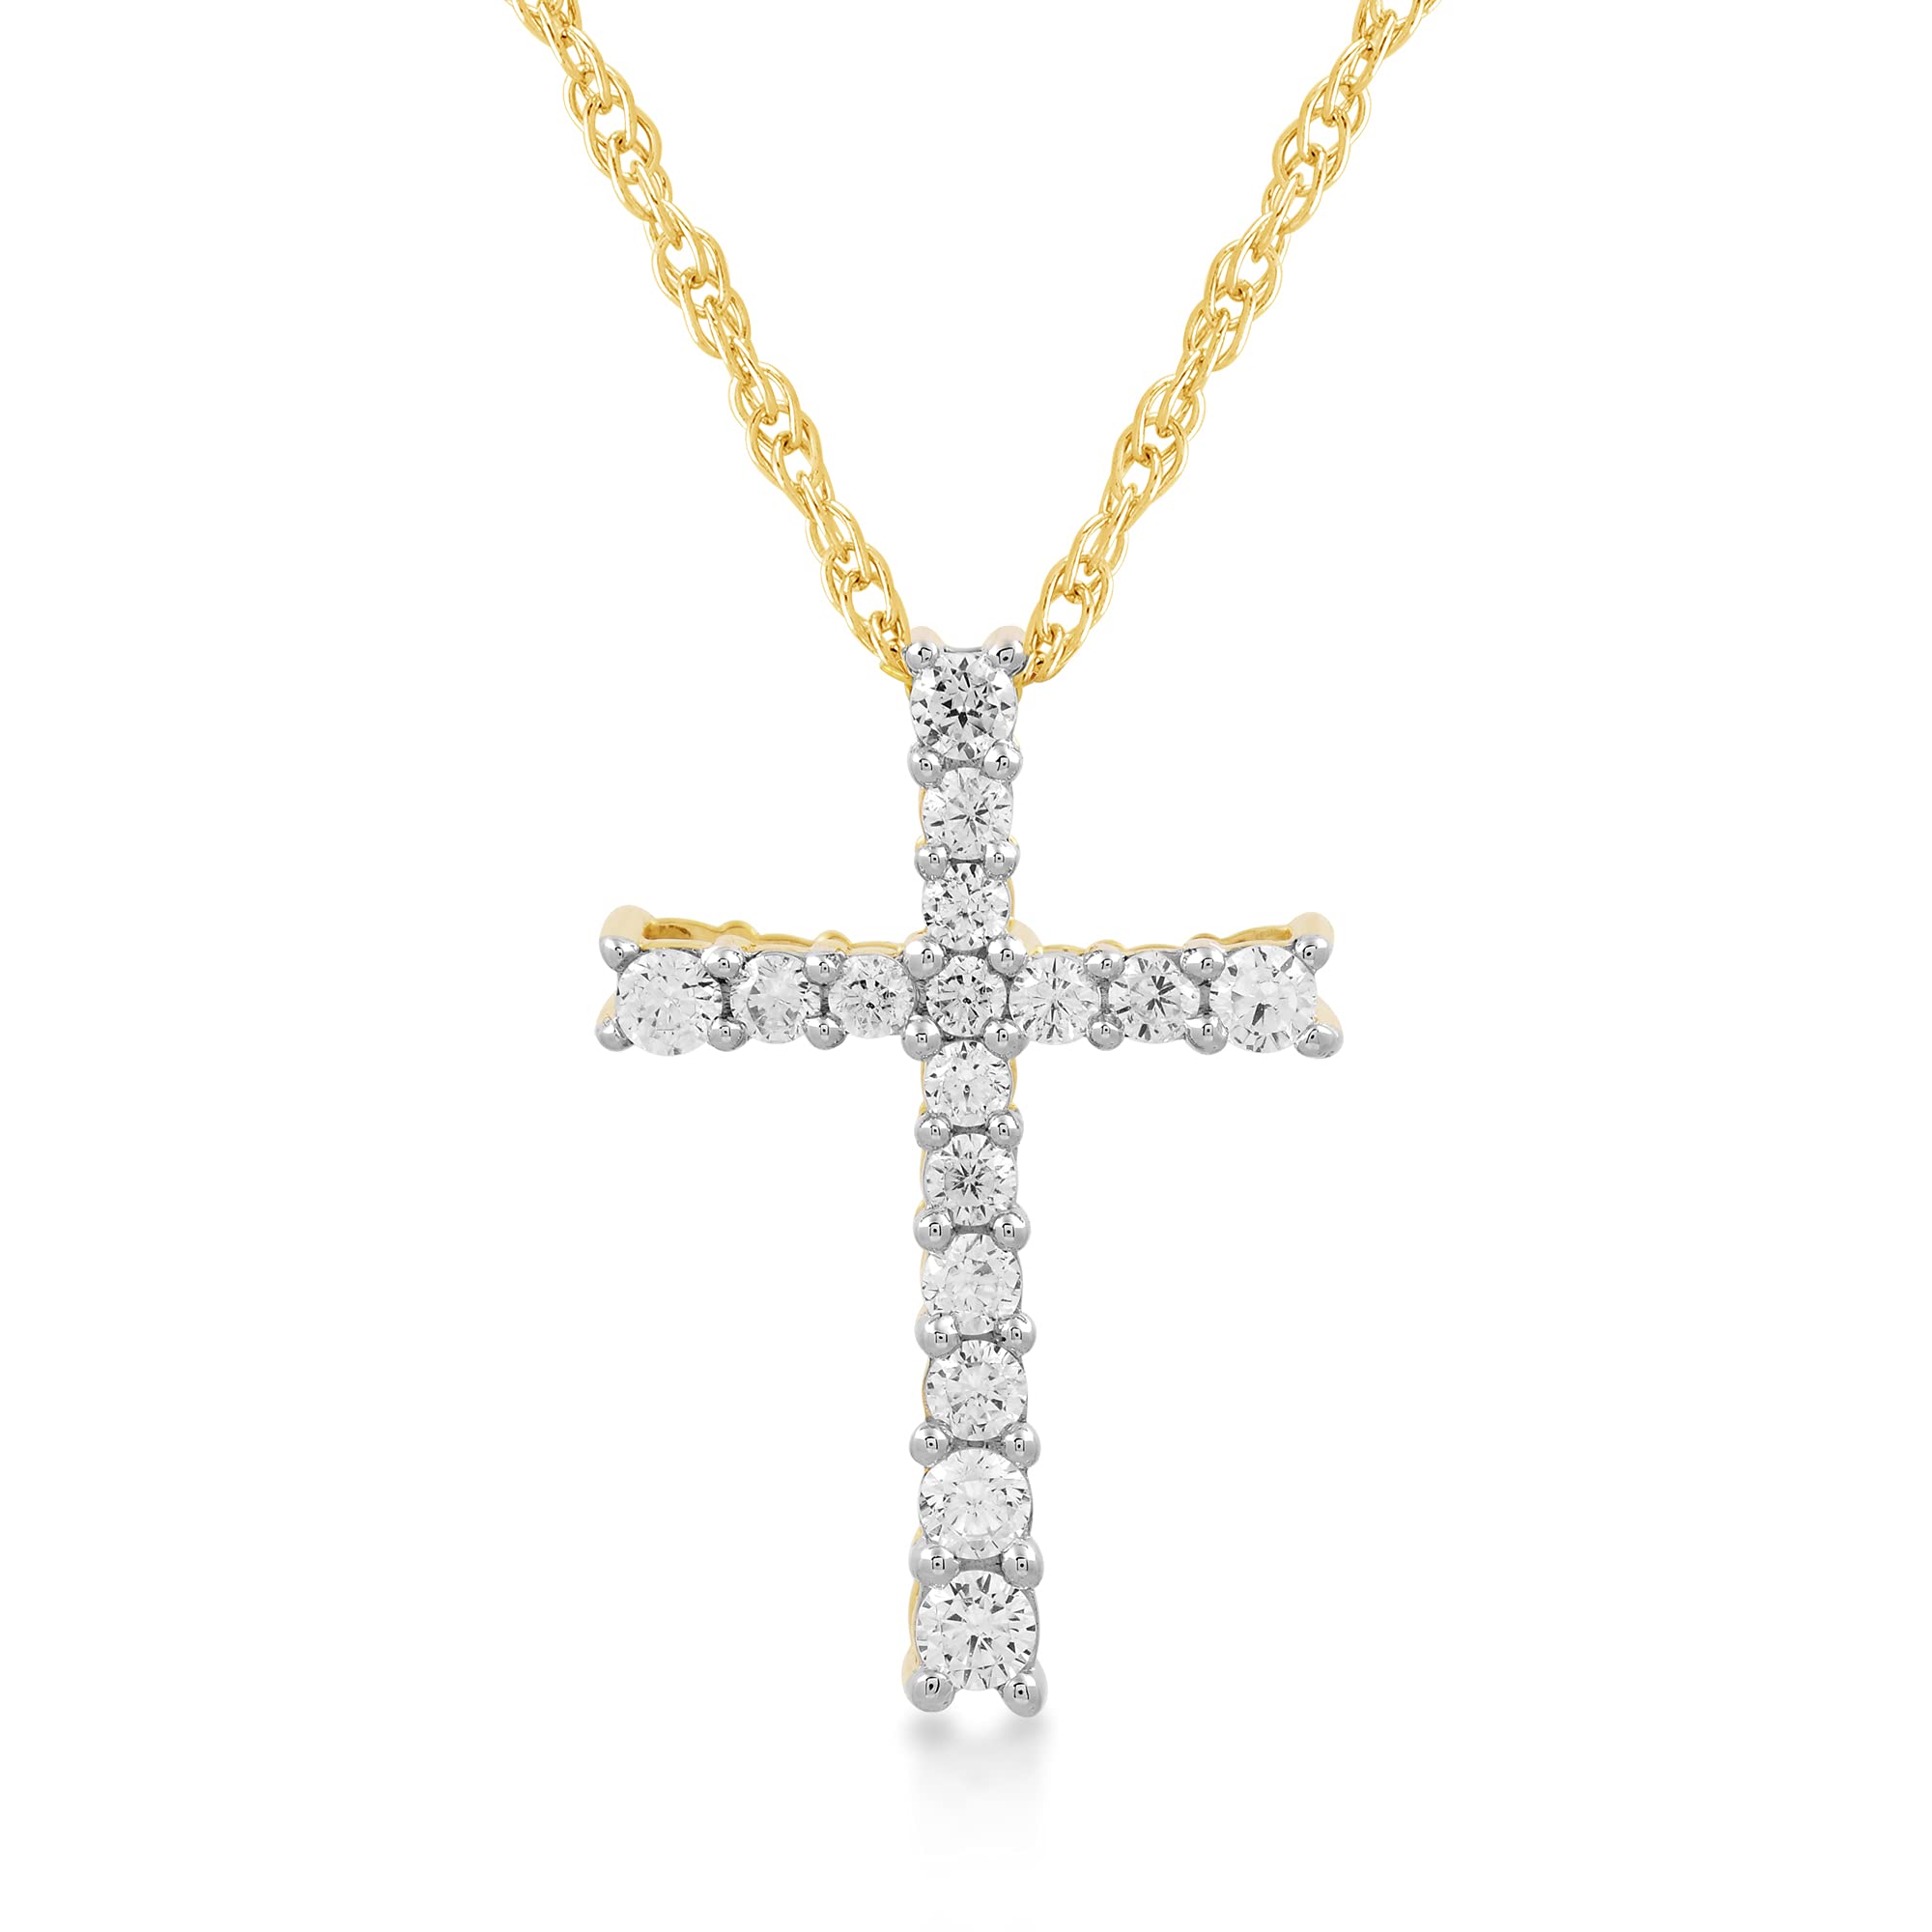 Jewelili Cross Pendant Necklace Jewelry in Gold